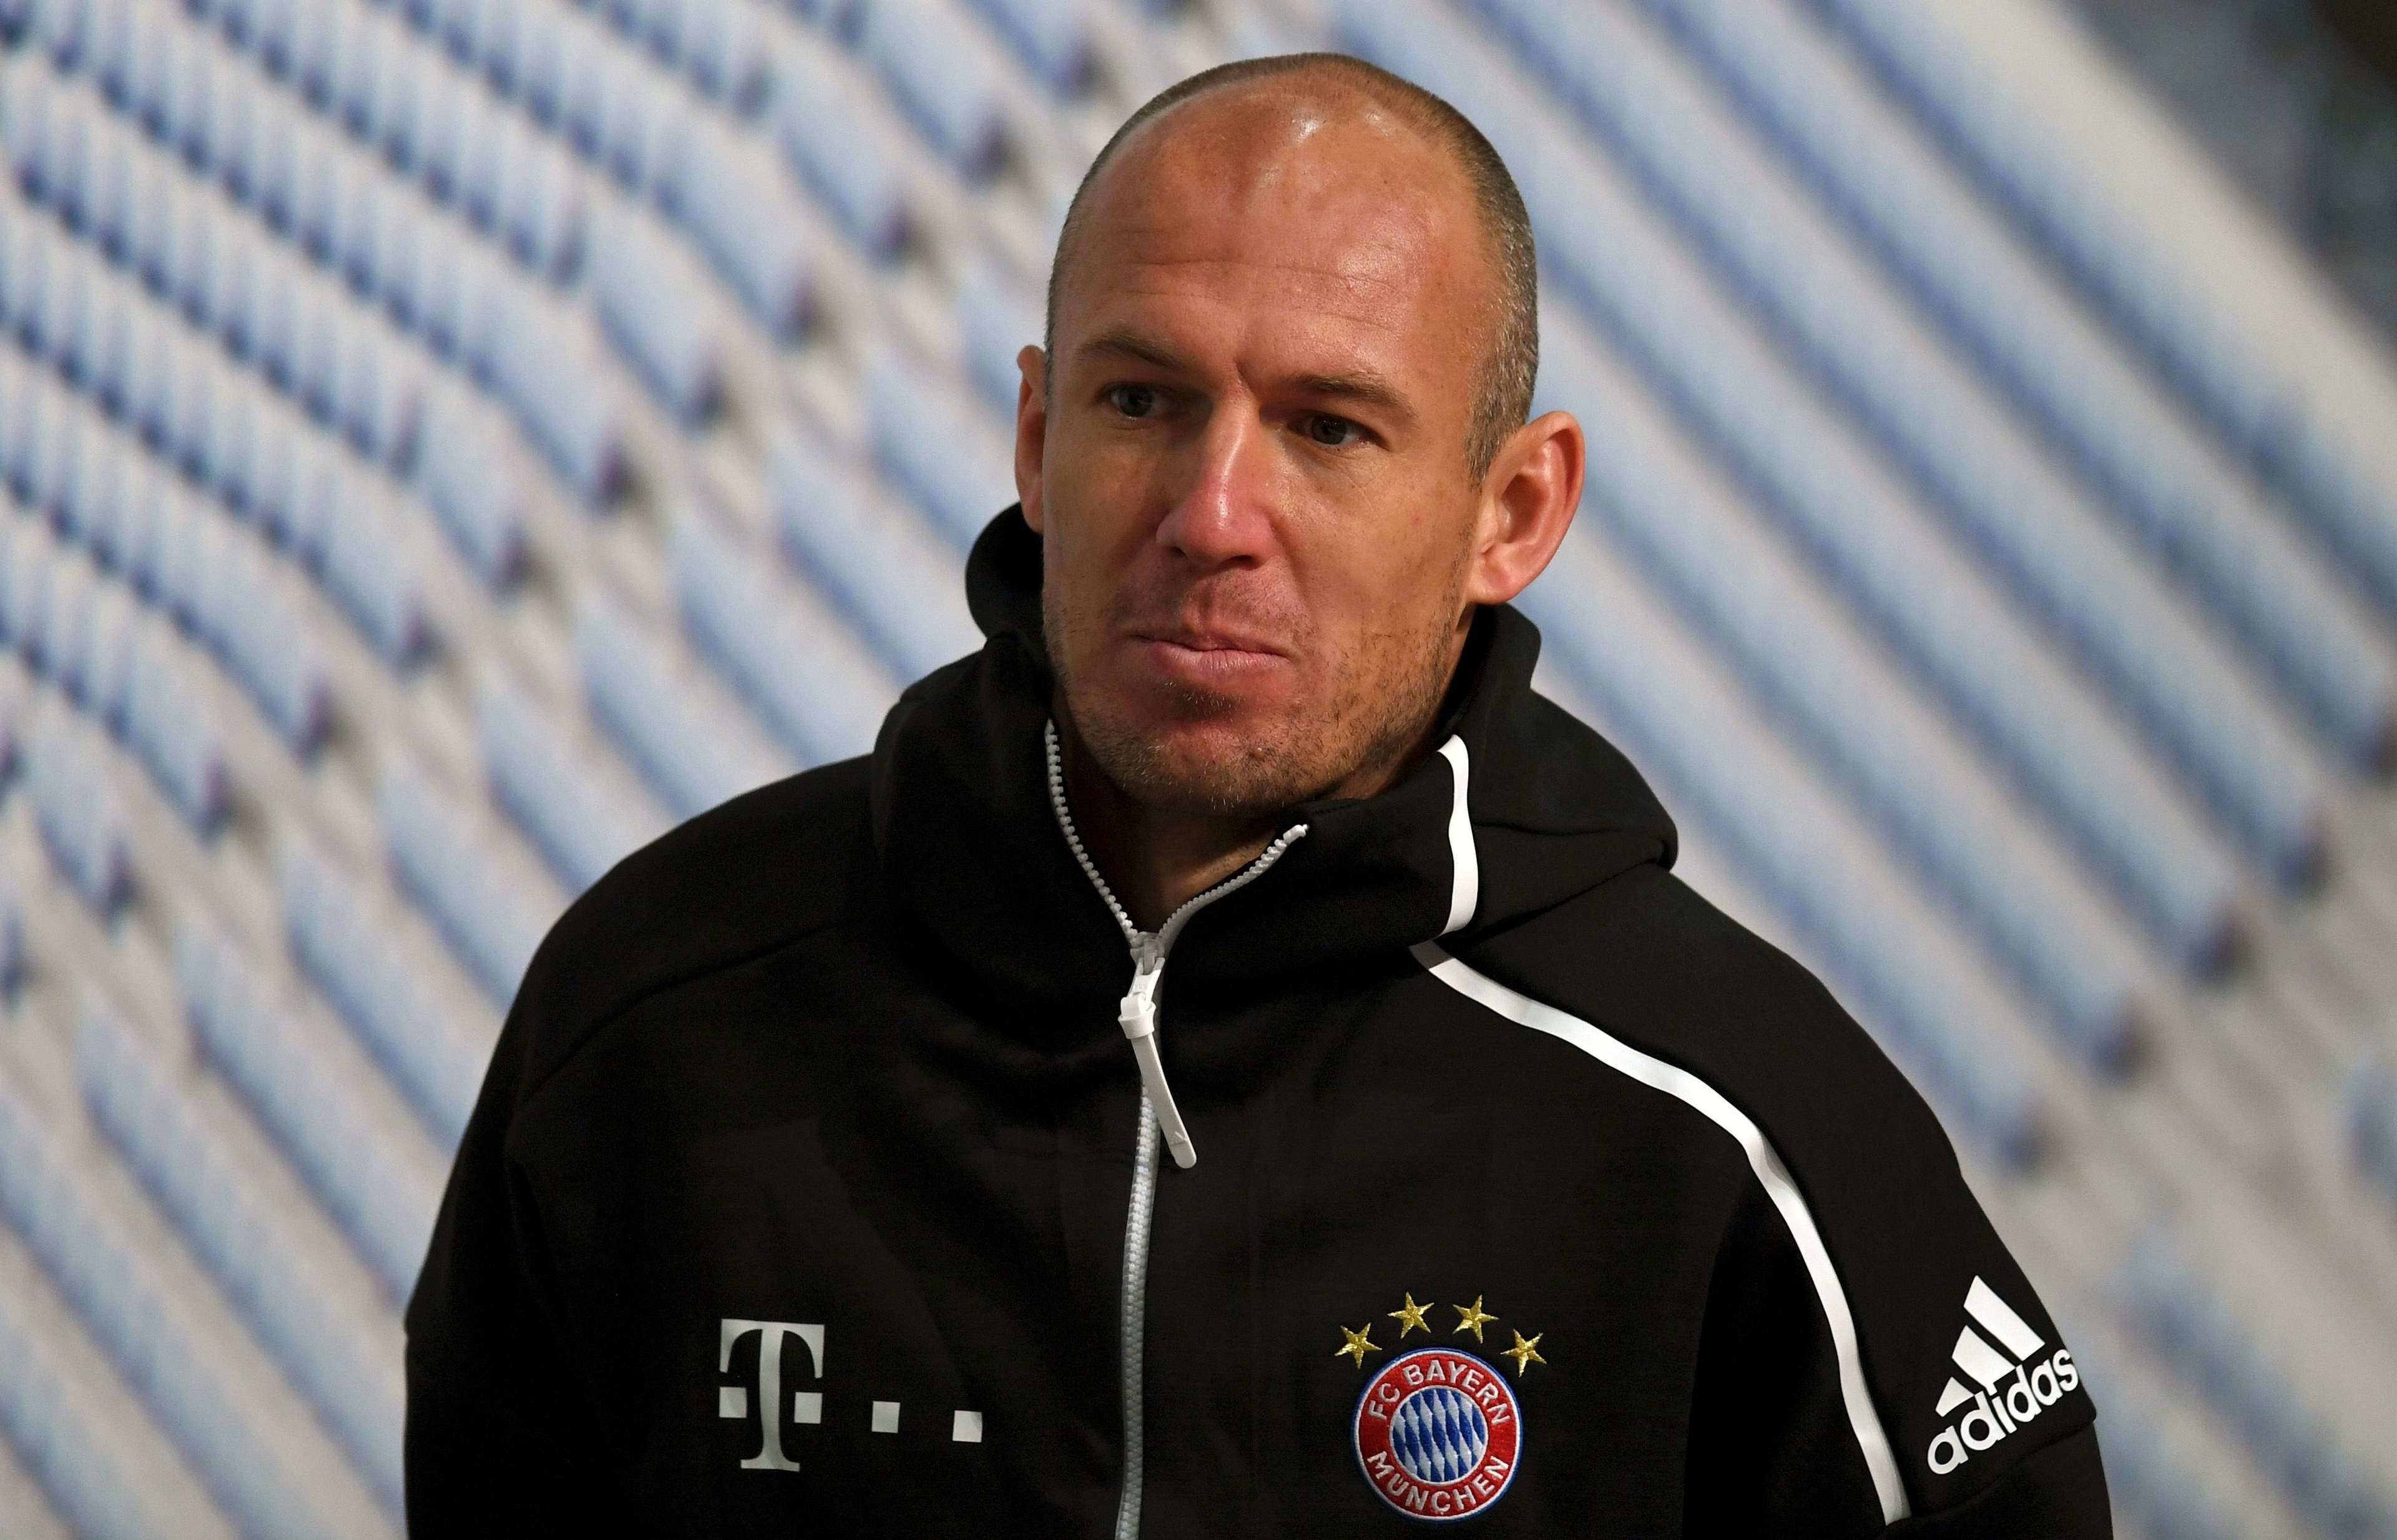 Arjen Robben Bayern Munchen